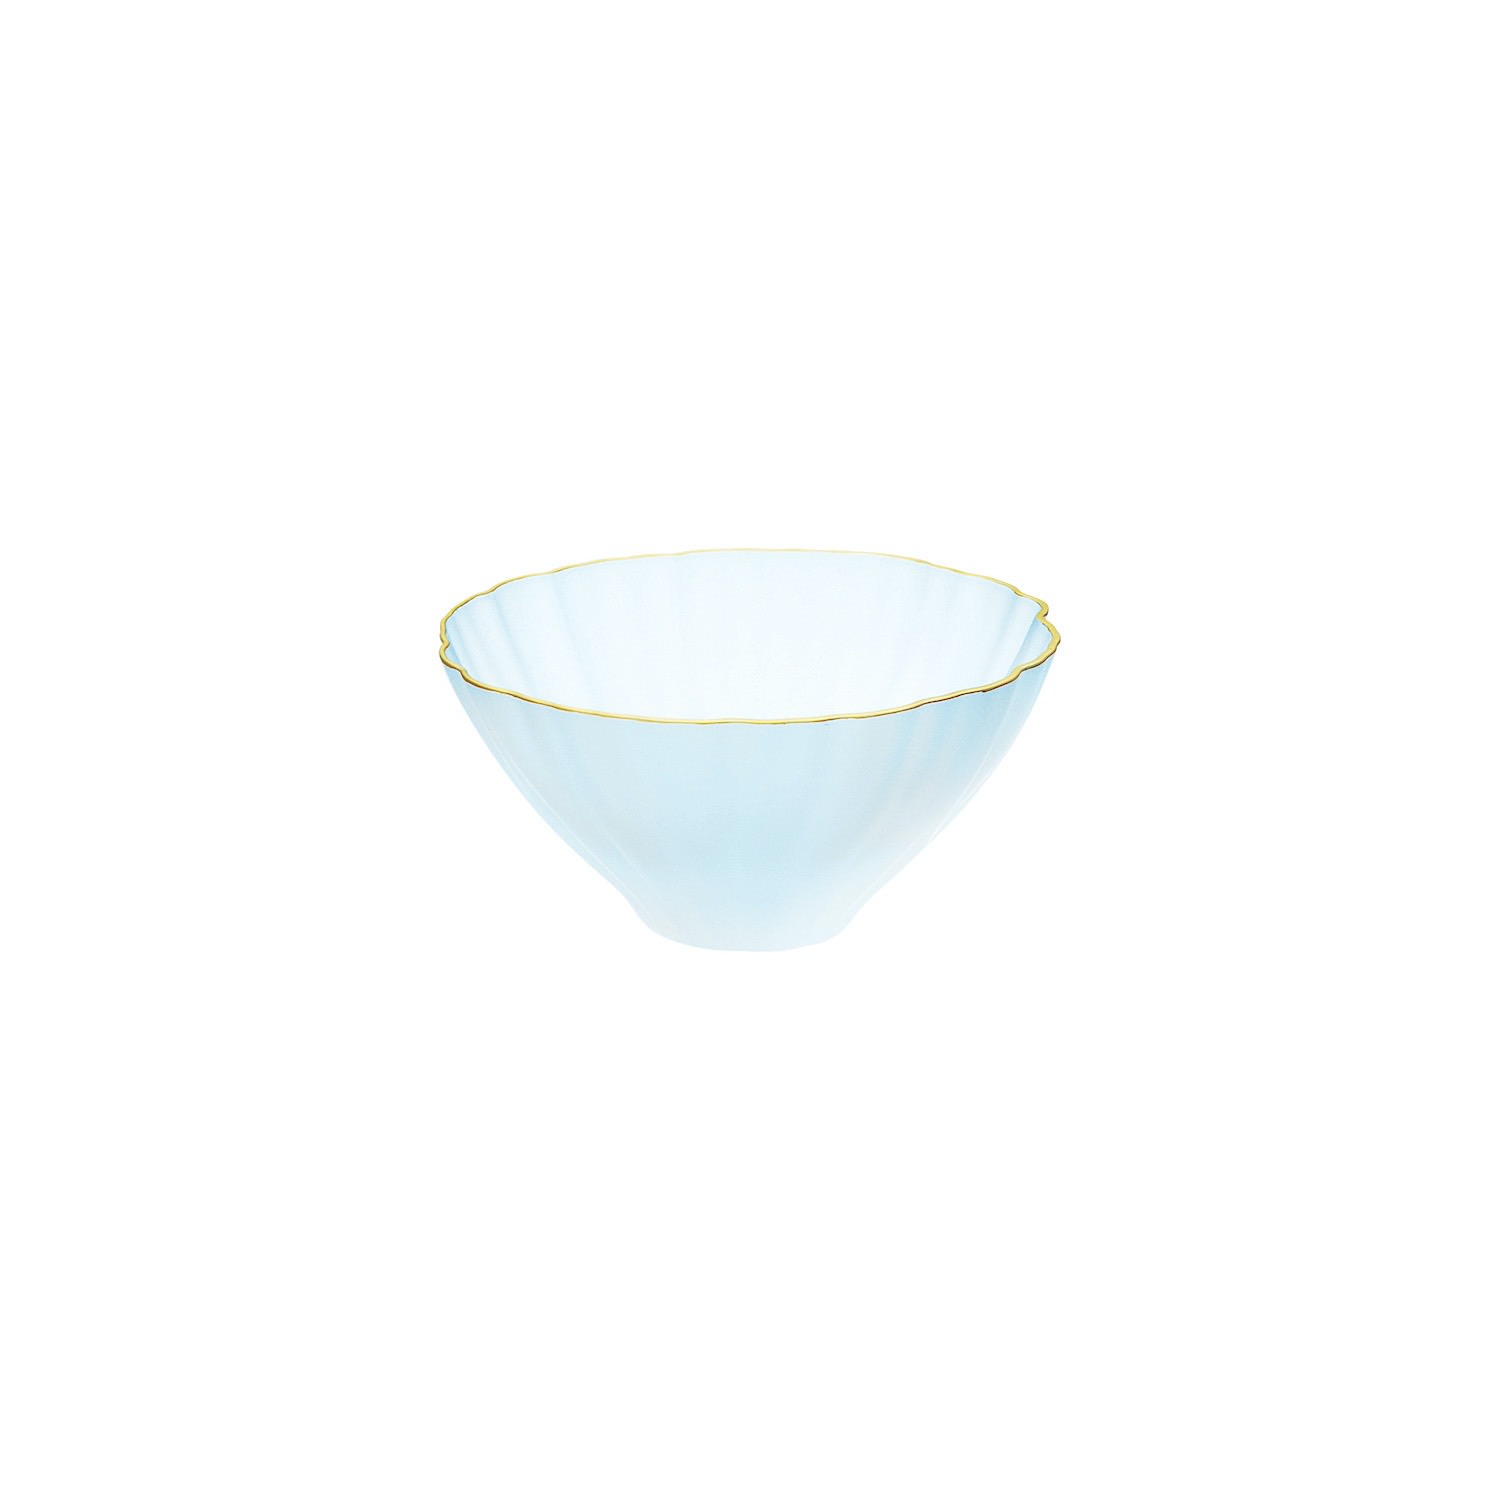 Sghr Sugahara Kikka Handcrafted Glass Bowl With Gold Rim - White 3.9"